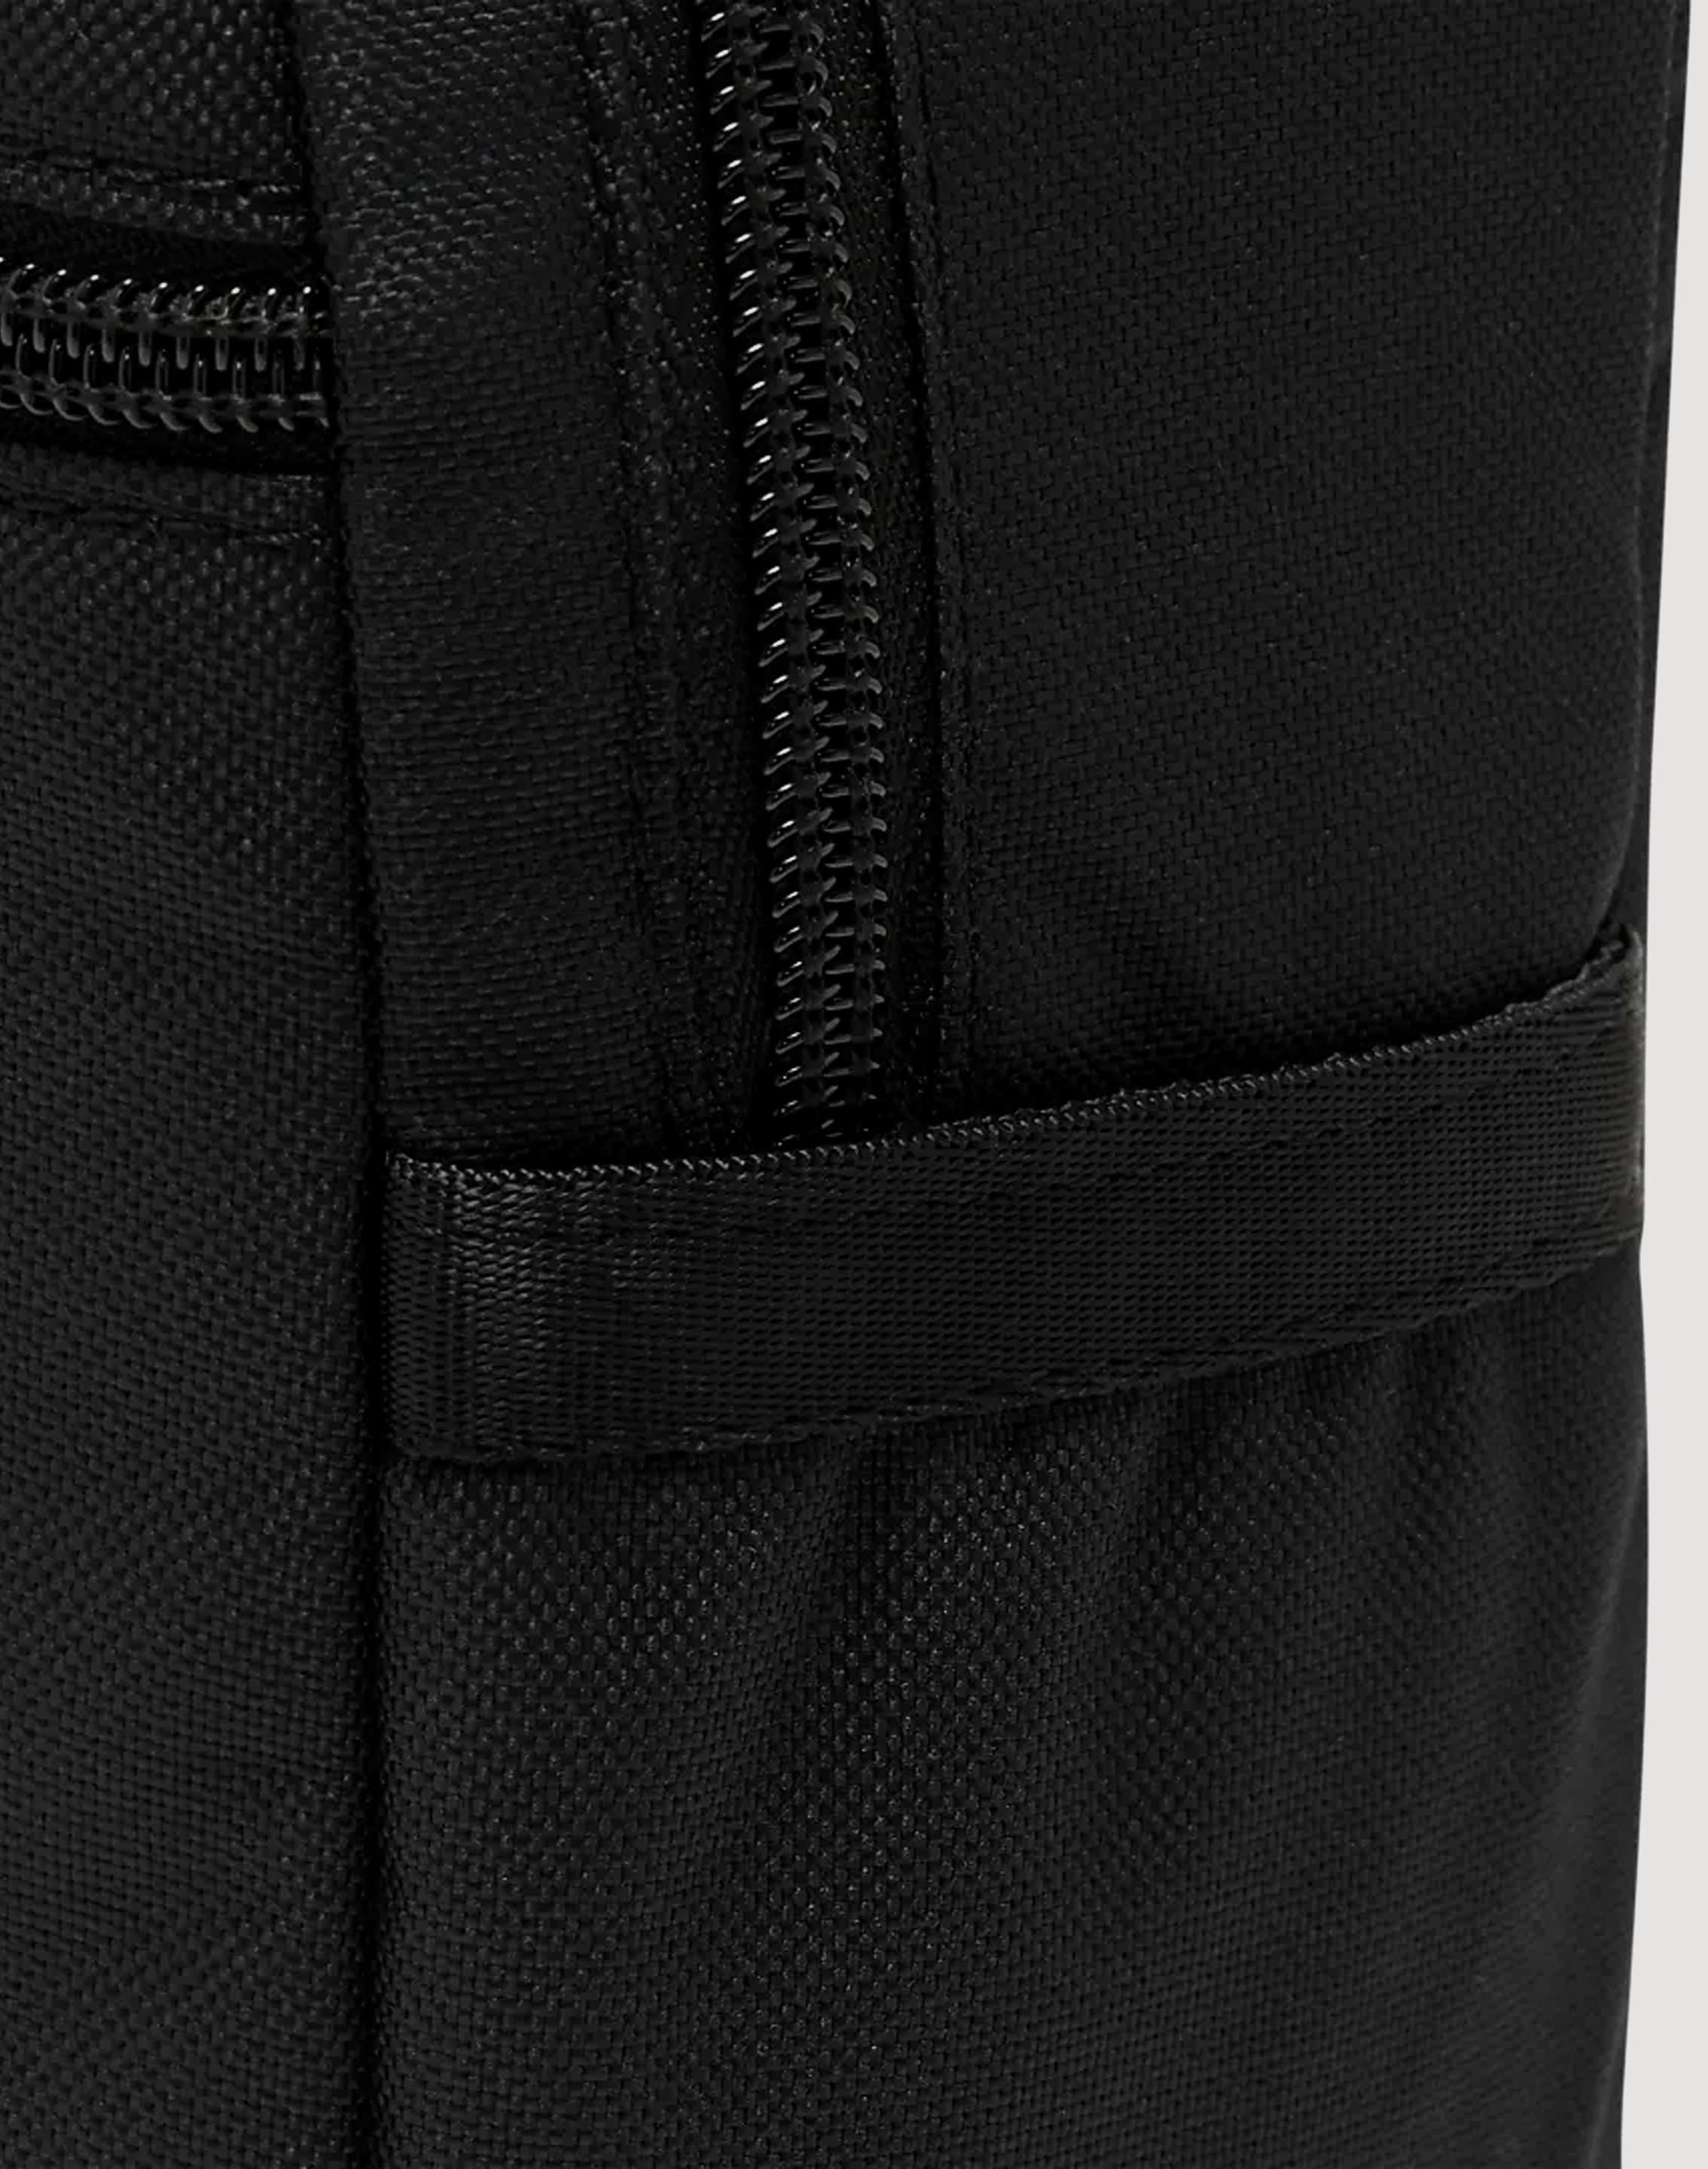 Nike Jordan Sportswear Futura MINI Backpack CW9301 Bag PINK GOLD  10x8x4" NEW $50